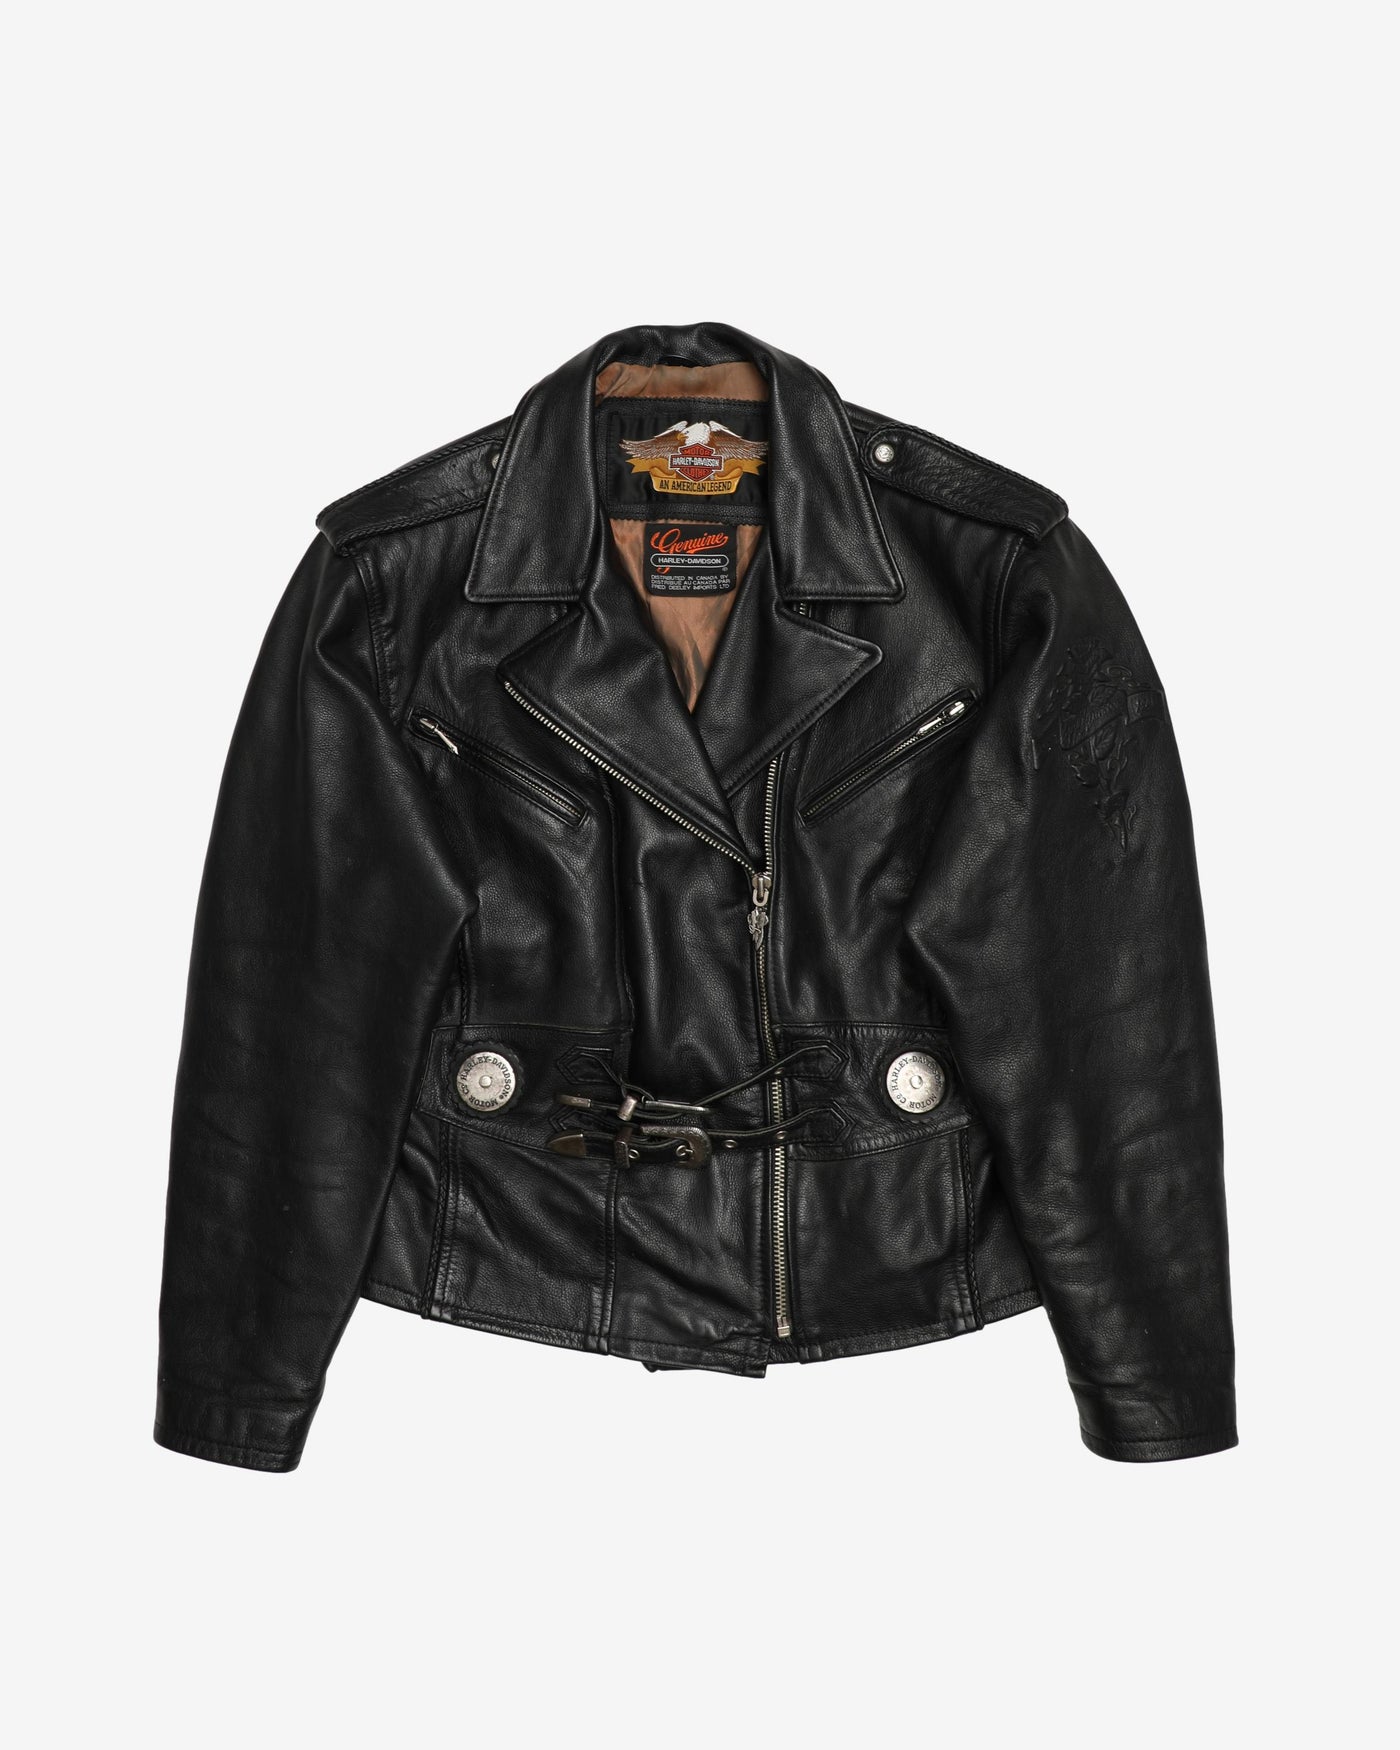 Vintage Harley Davidson Authentic Genuine Leather Jacket - S